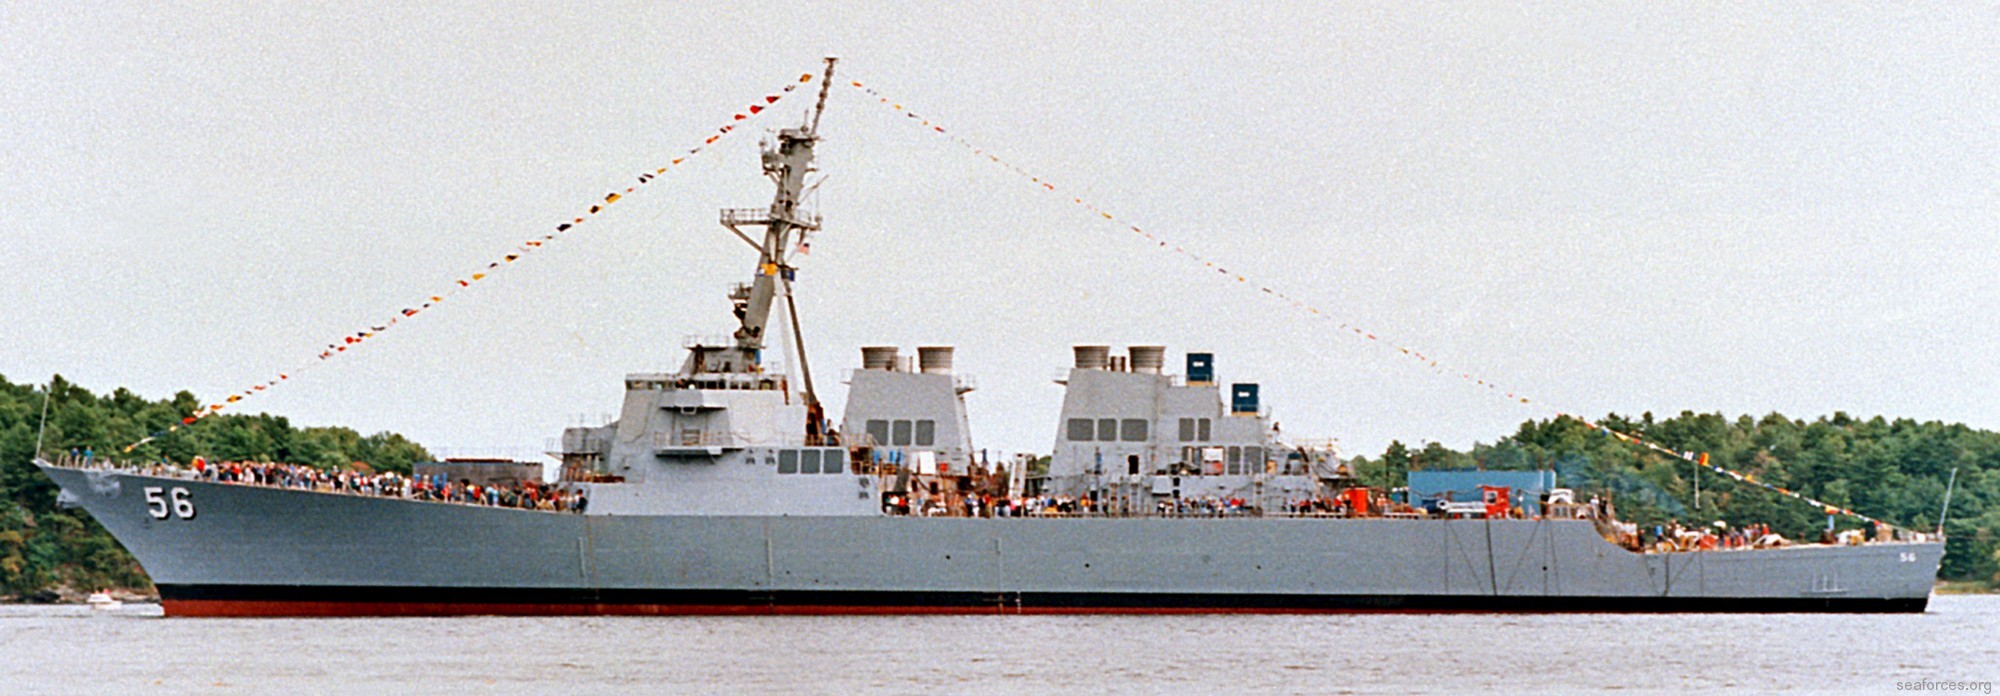 uss john s. mccain ddg-56 arleigh burke class destroyer us navy 95 launching ceremony 1992